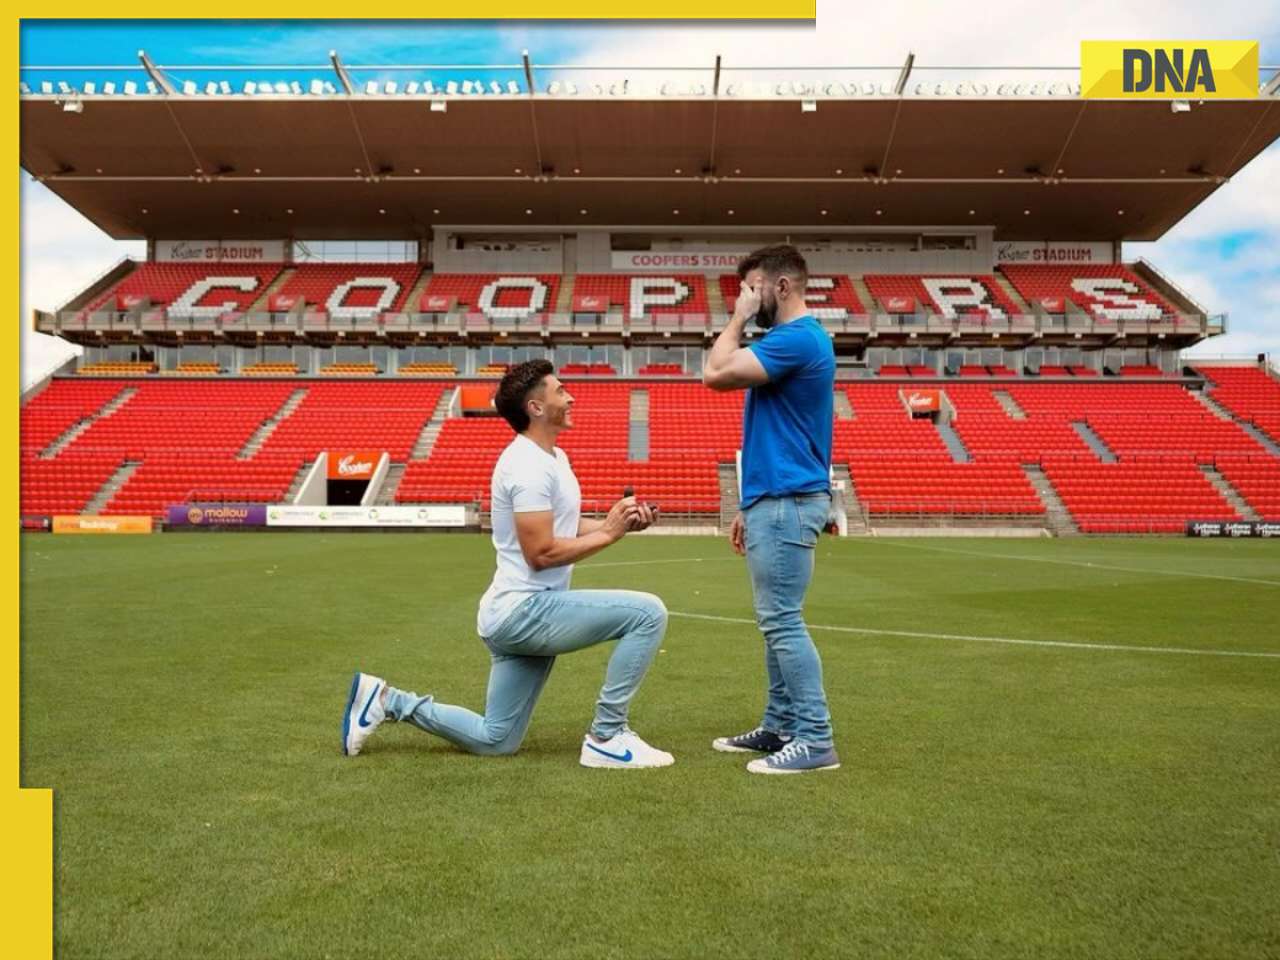 Australian gay footballer proposes to partner at stadium, internet reacts